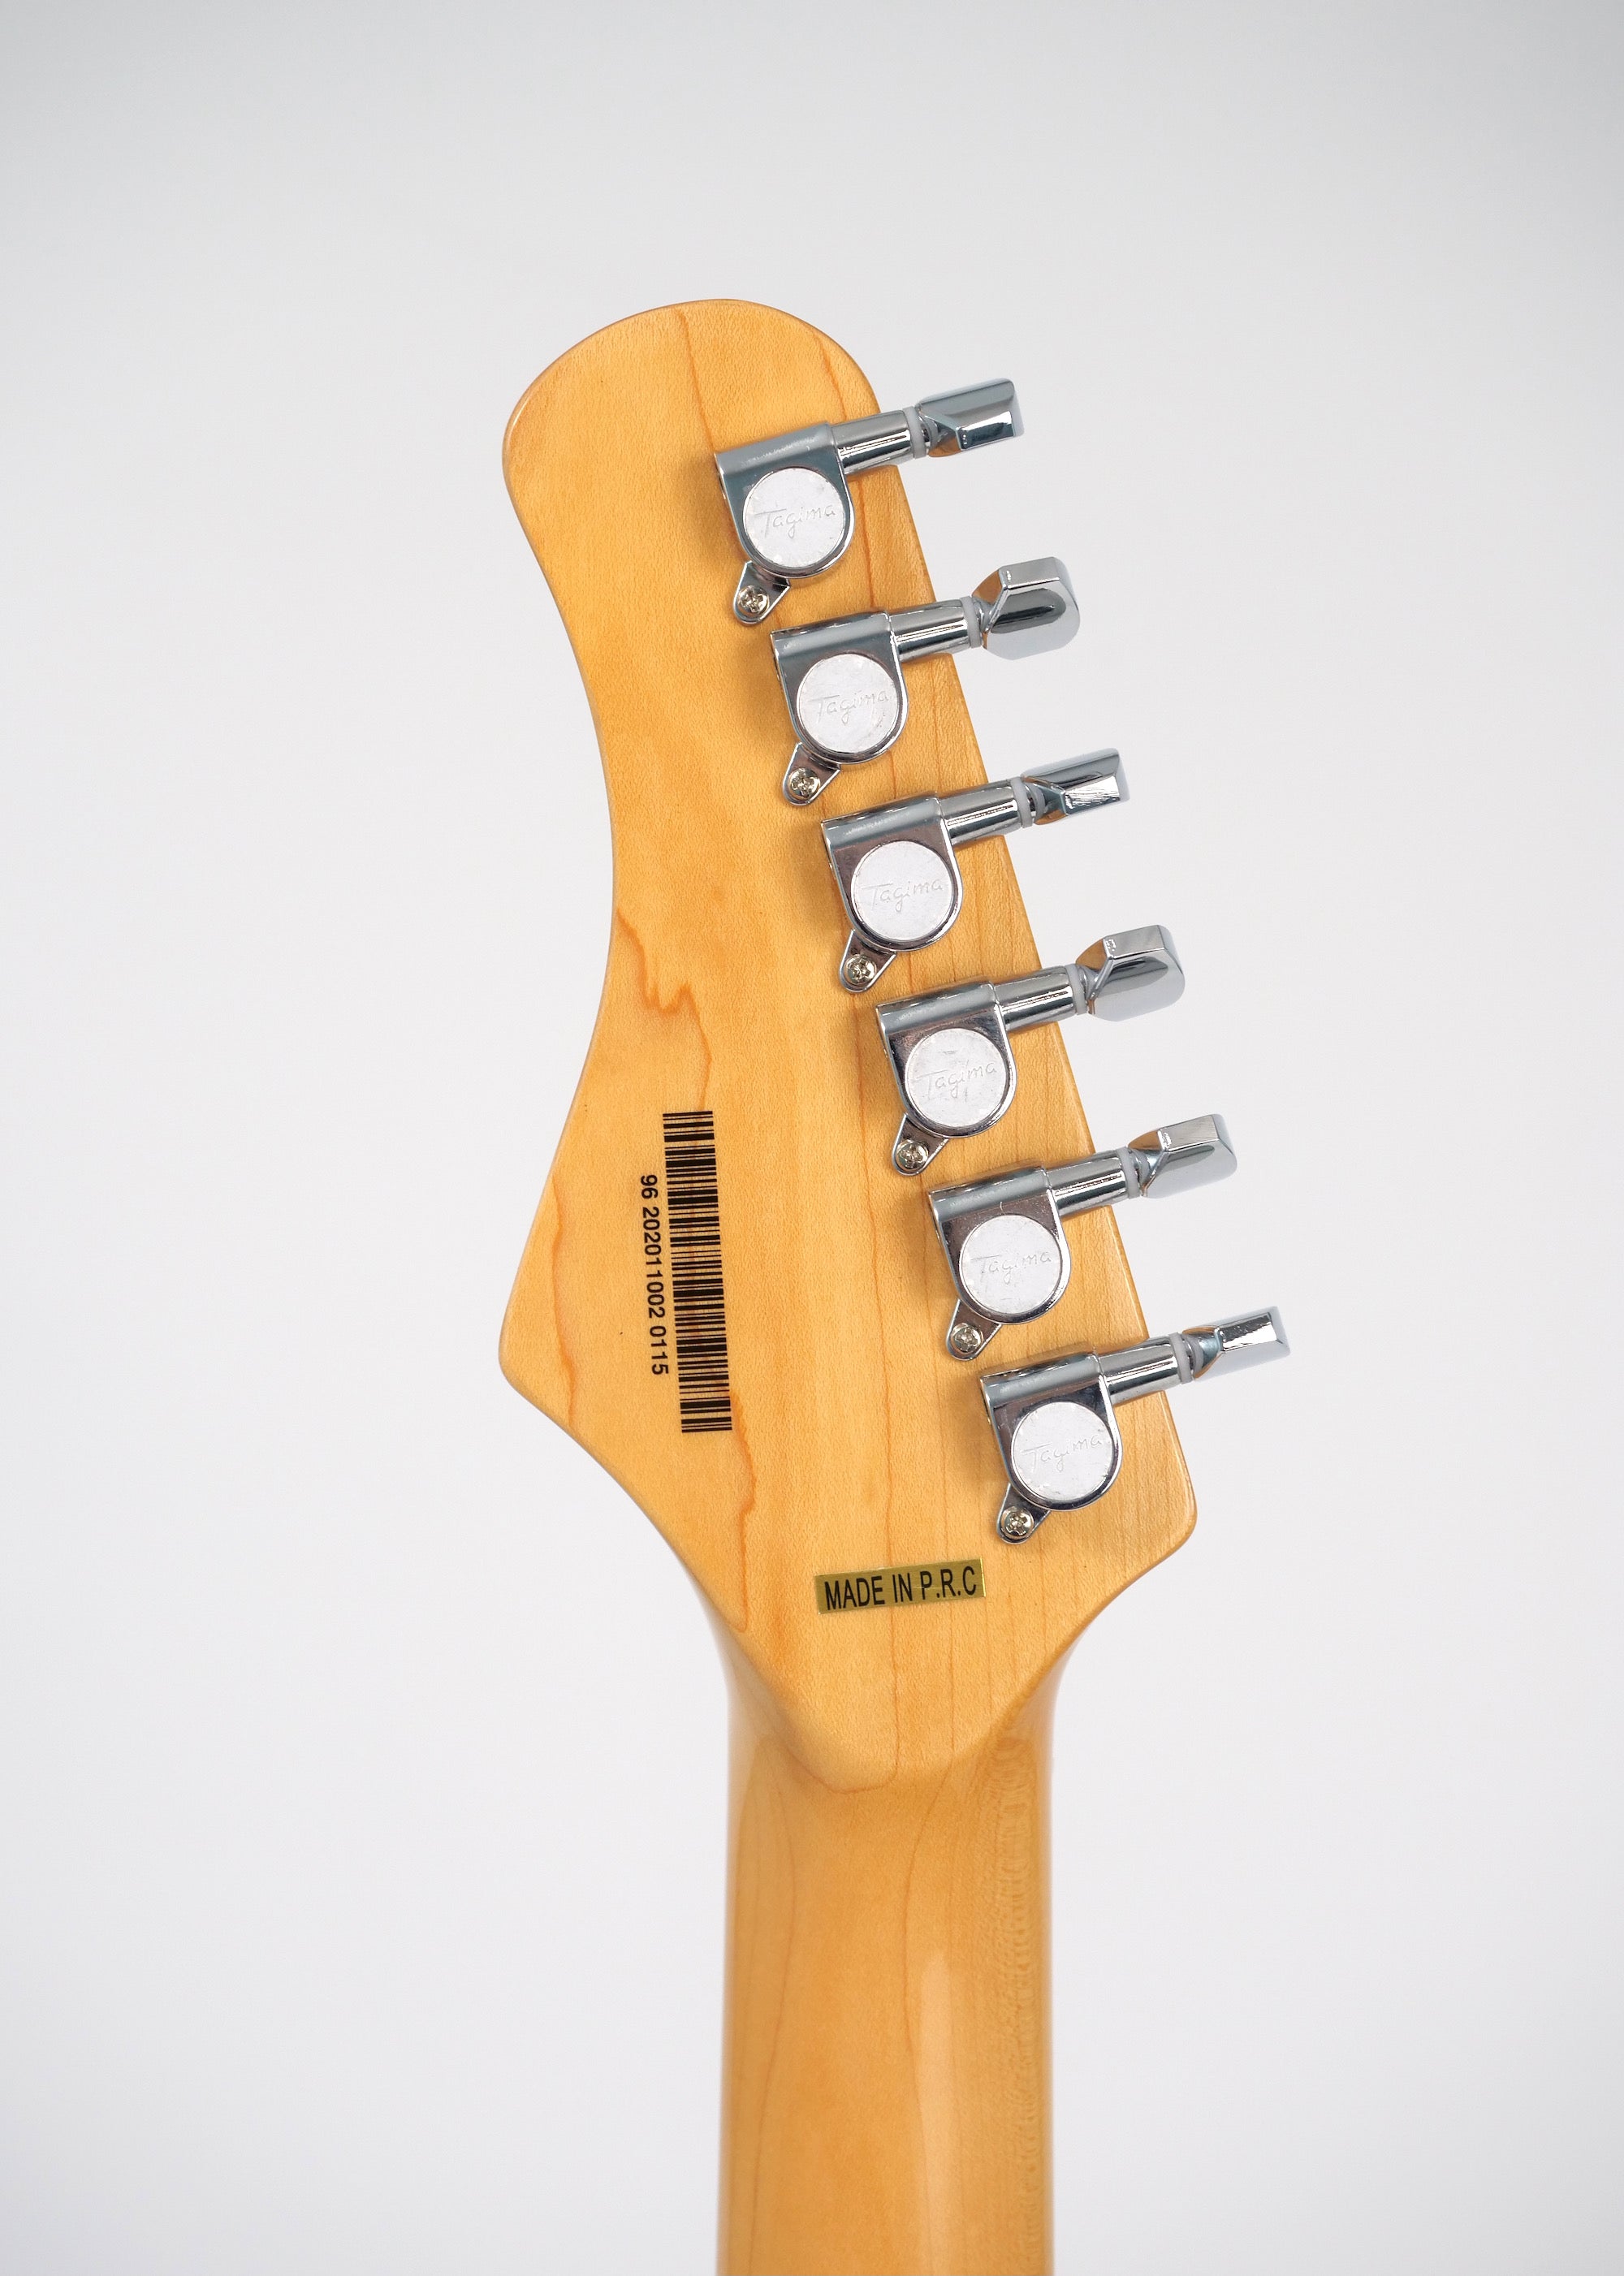 Tagima TG-530 Strat-Style Electric Guitar - Lake Placid Blue TG-530-LPB-LF/MG Headstock Back